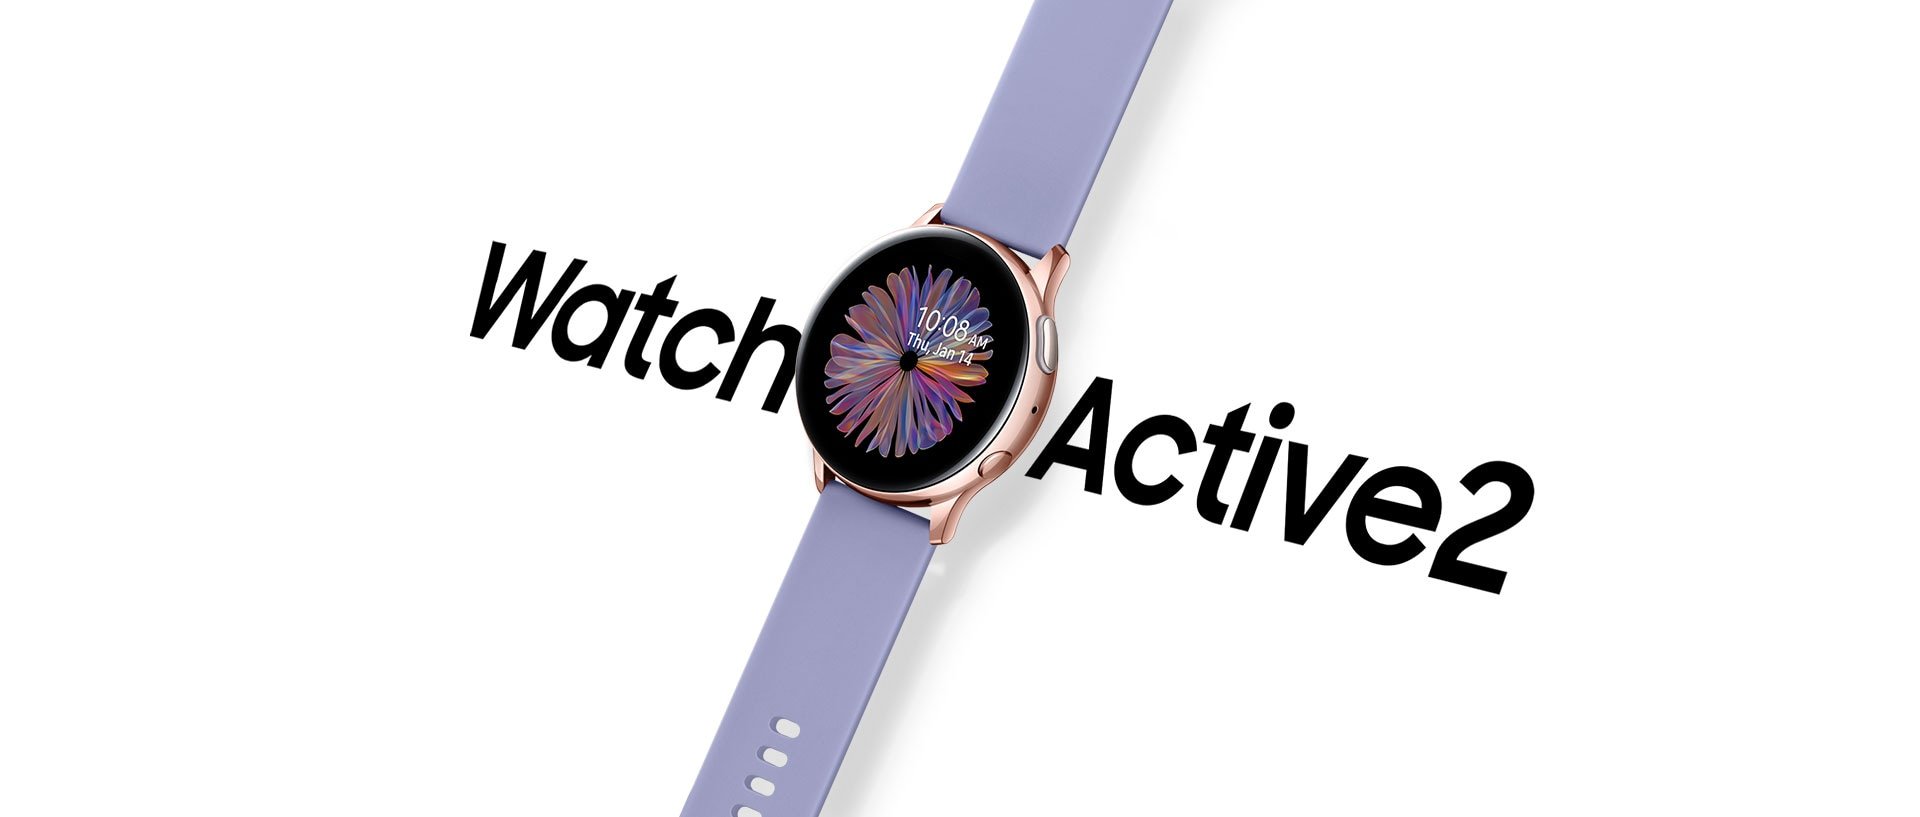 I-Samsung Galaxy Watch Active2